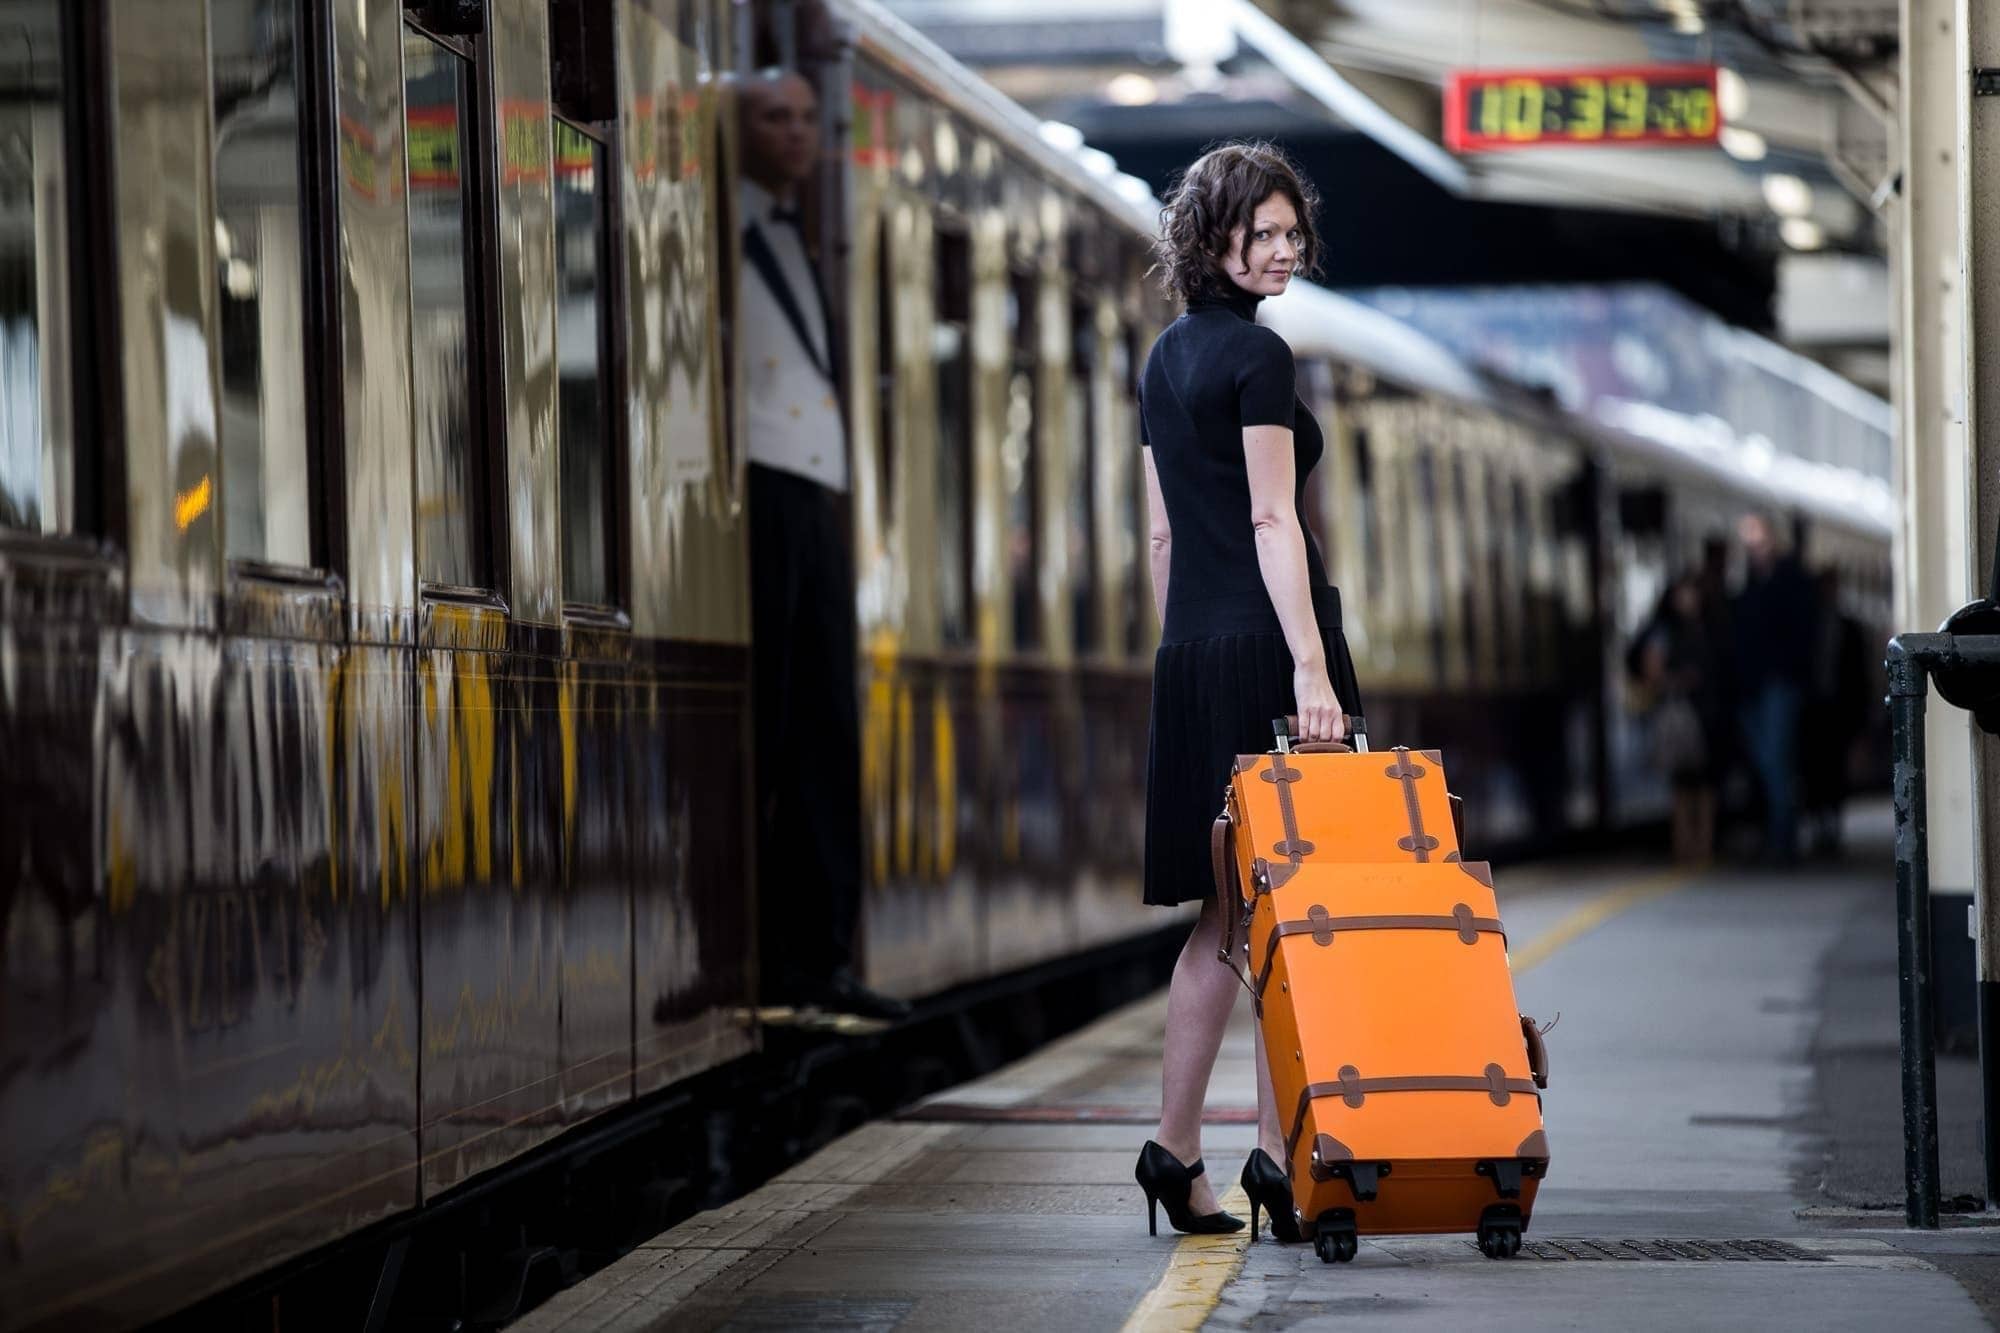 Girl with luggage on train platform image